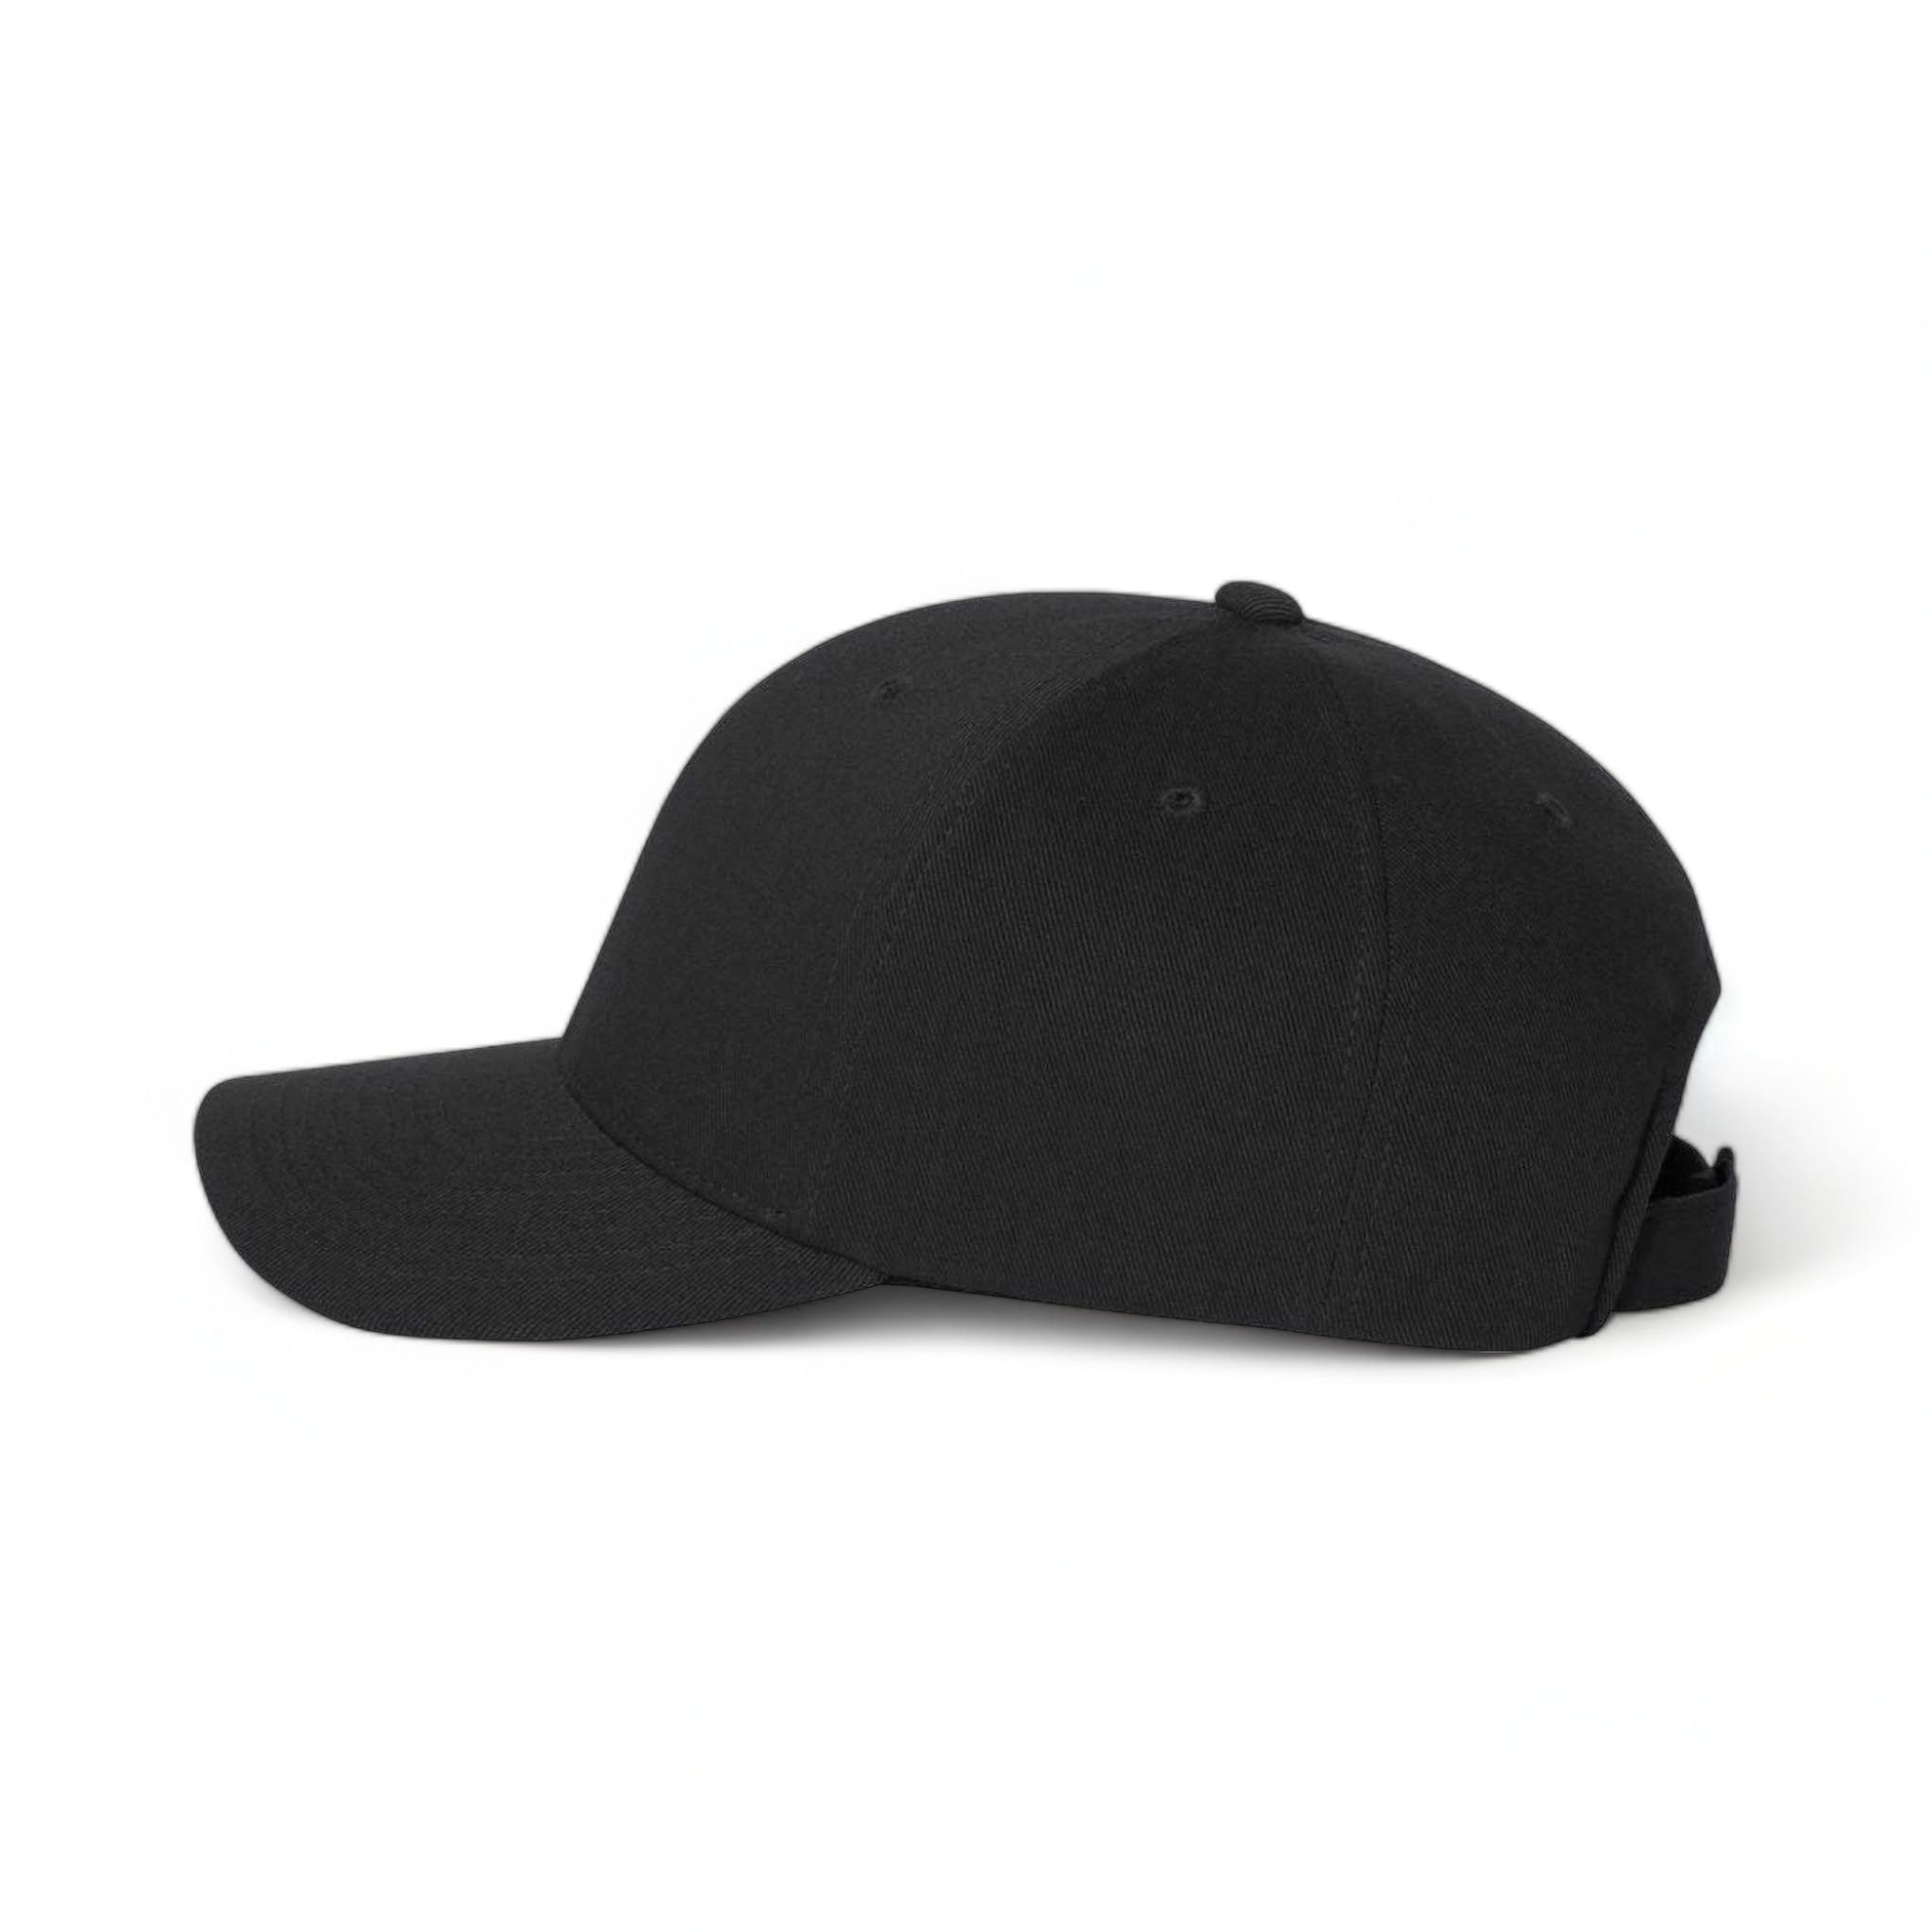 Side view of Flexfit 110C custom hat in black